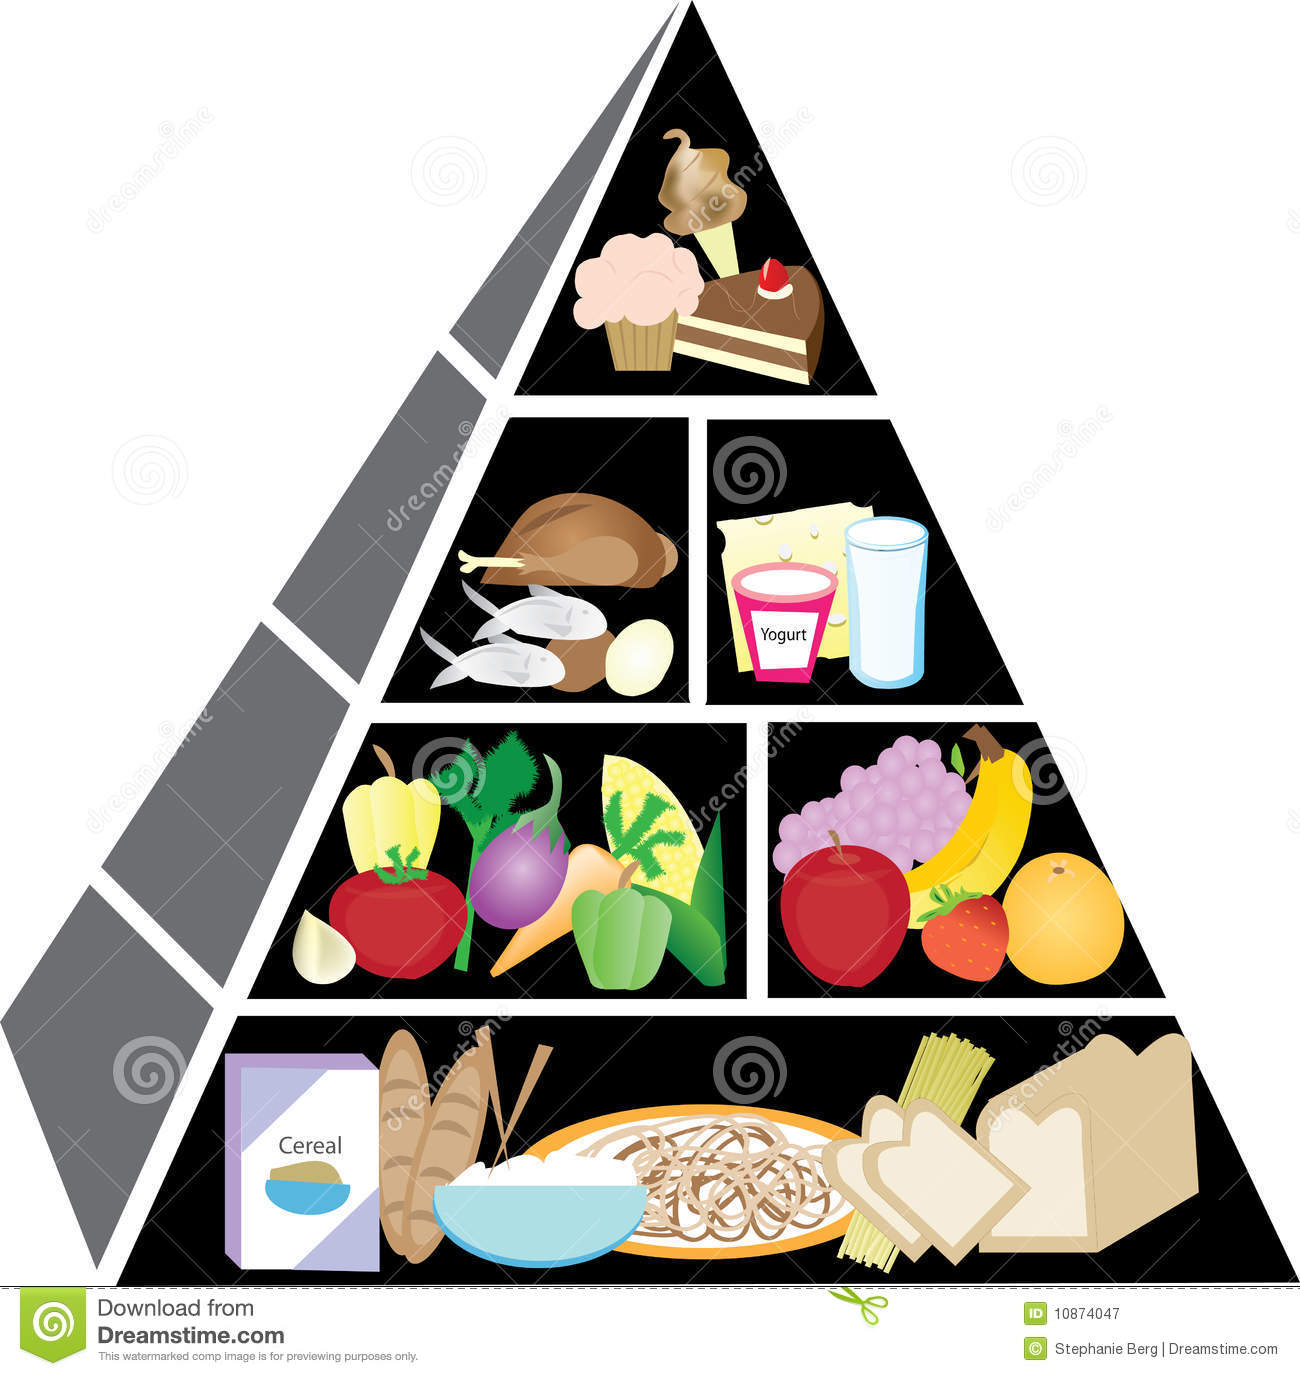 Healthy Food Pyramid Royalty Free Stock Photography   Image  10874047